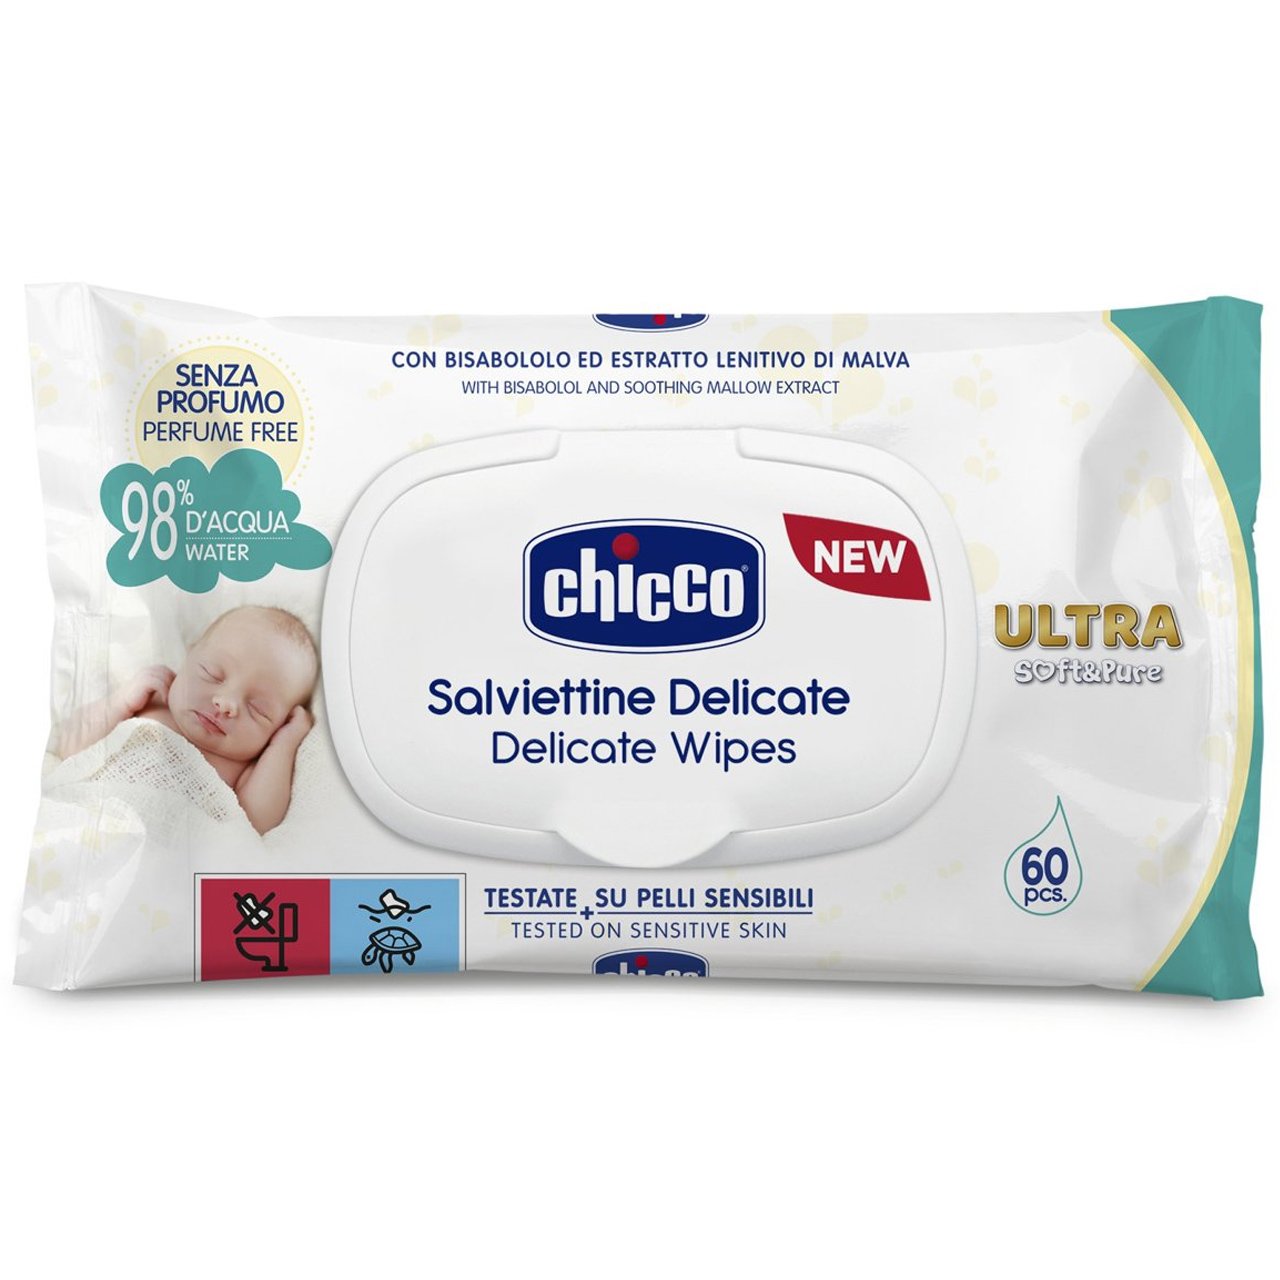 Chicco Ultra-Soft Μωρομάντηλα με Καπάκι 60 Τεμάχια,Διπλής Δράσης για Απαλό & Αποτελεσματικό Καθαρισμό